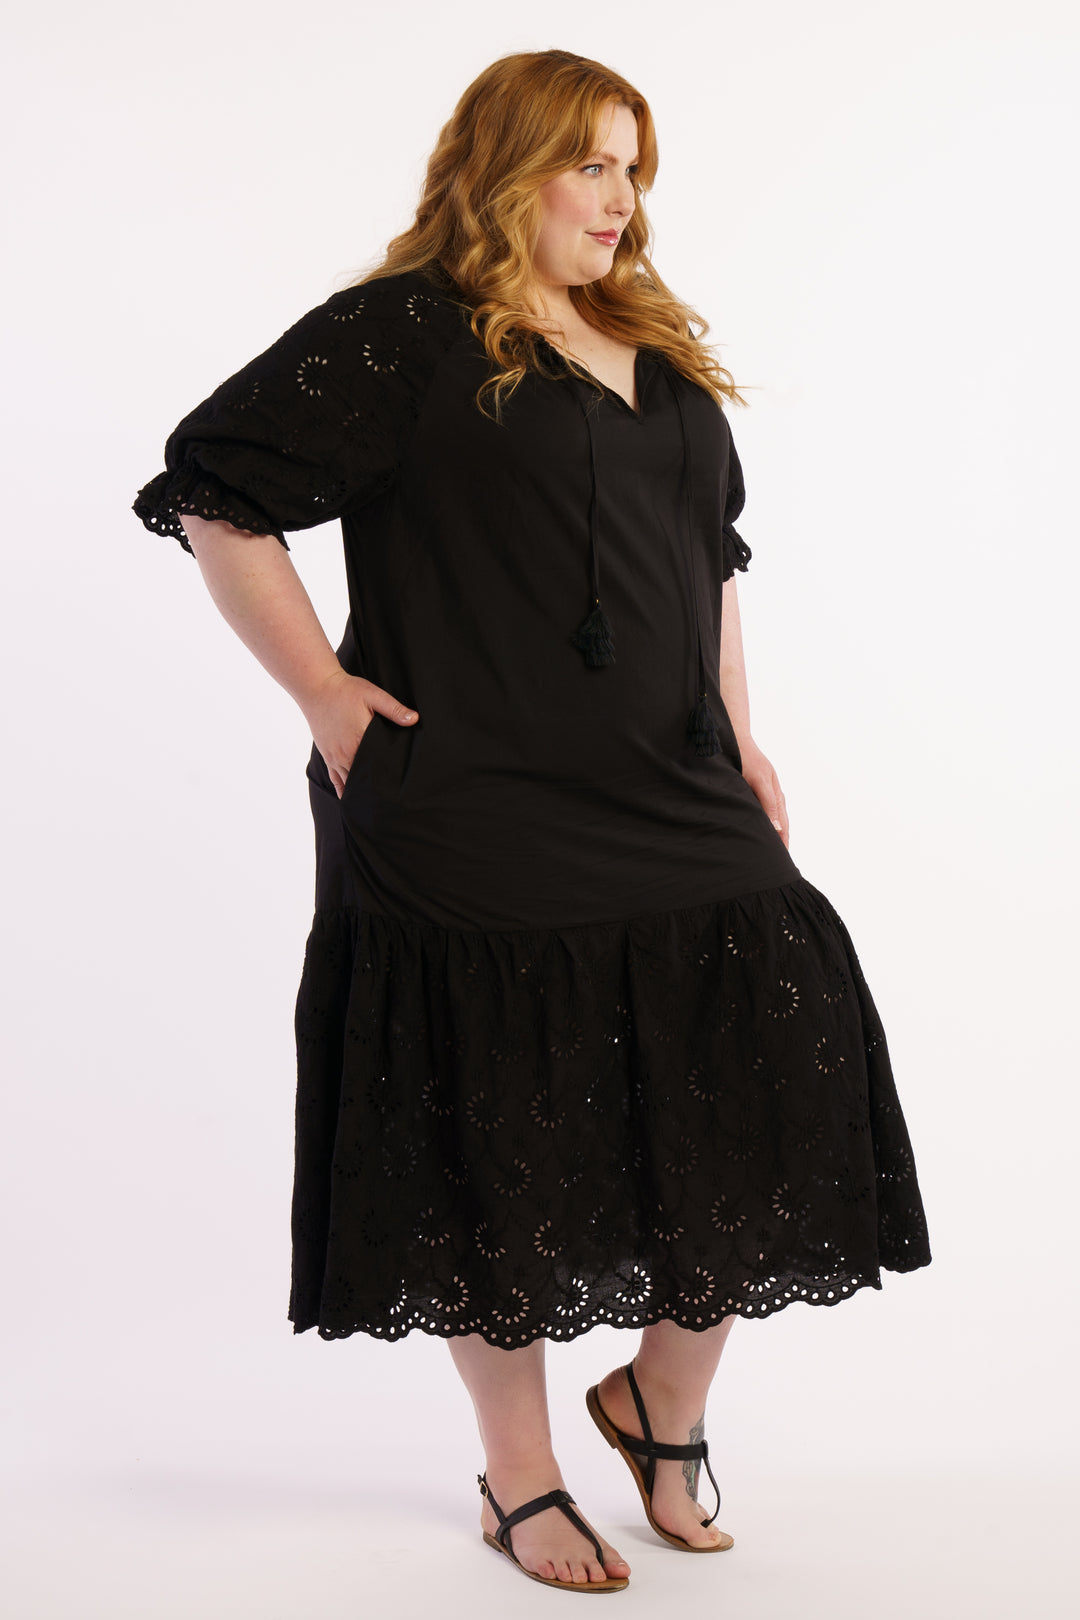 Summer Breeze Broidery Dress - Black - LAST ONES -  S (14/16)